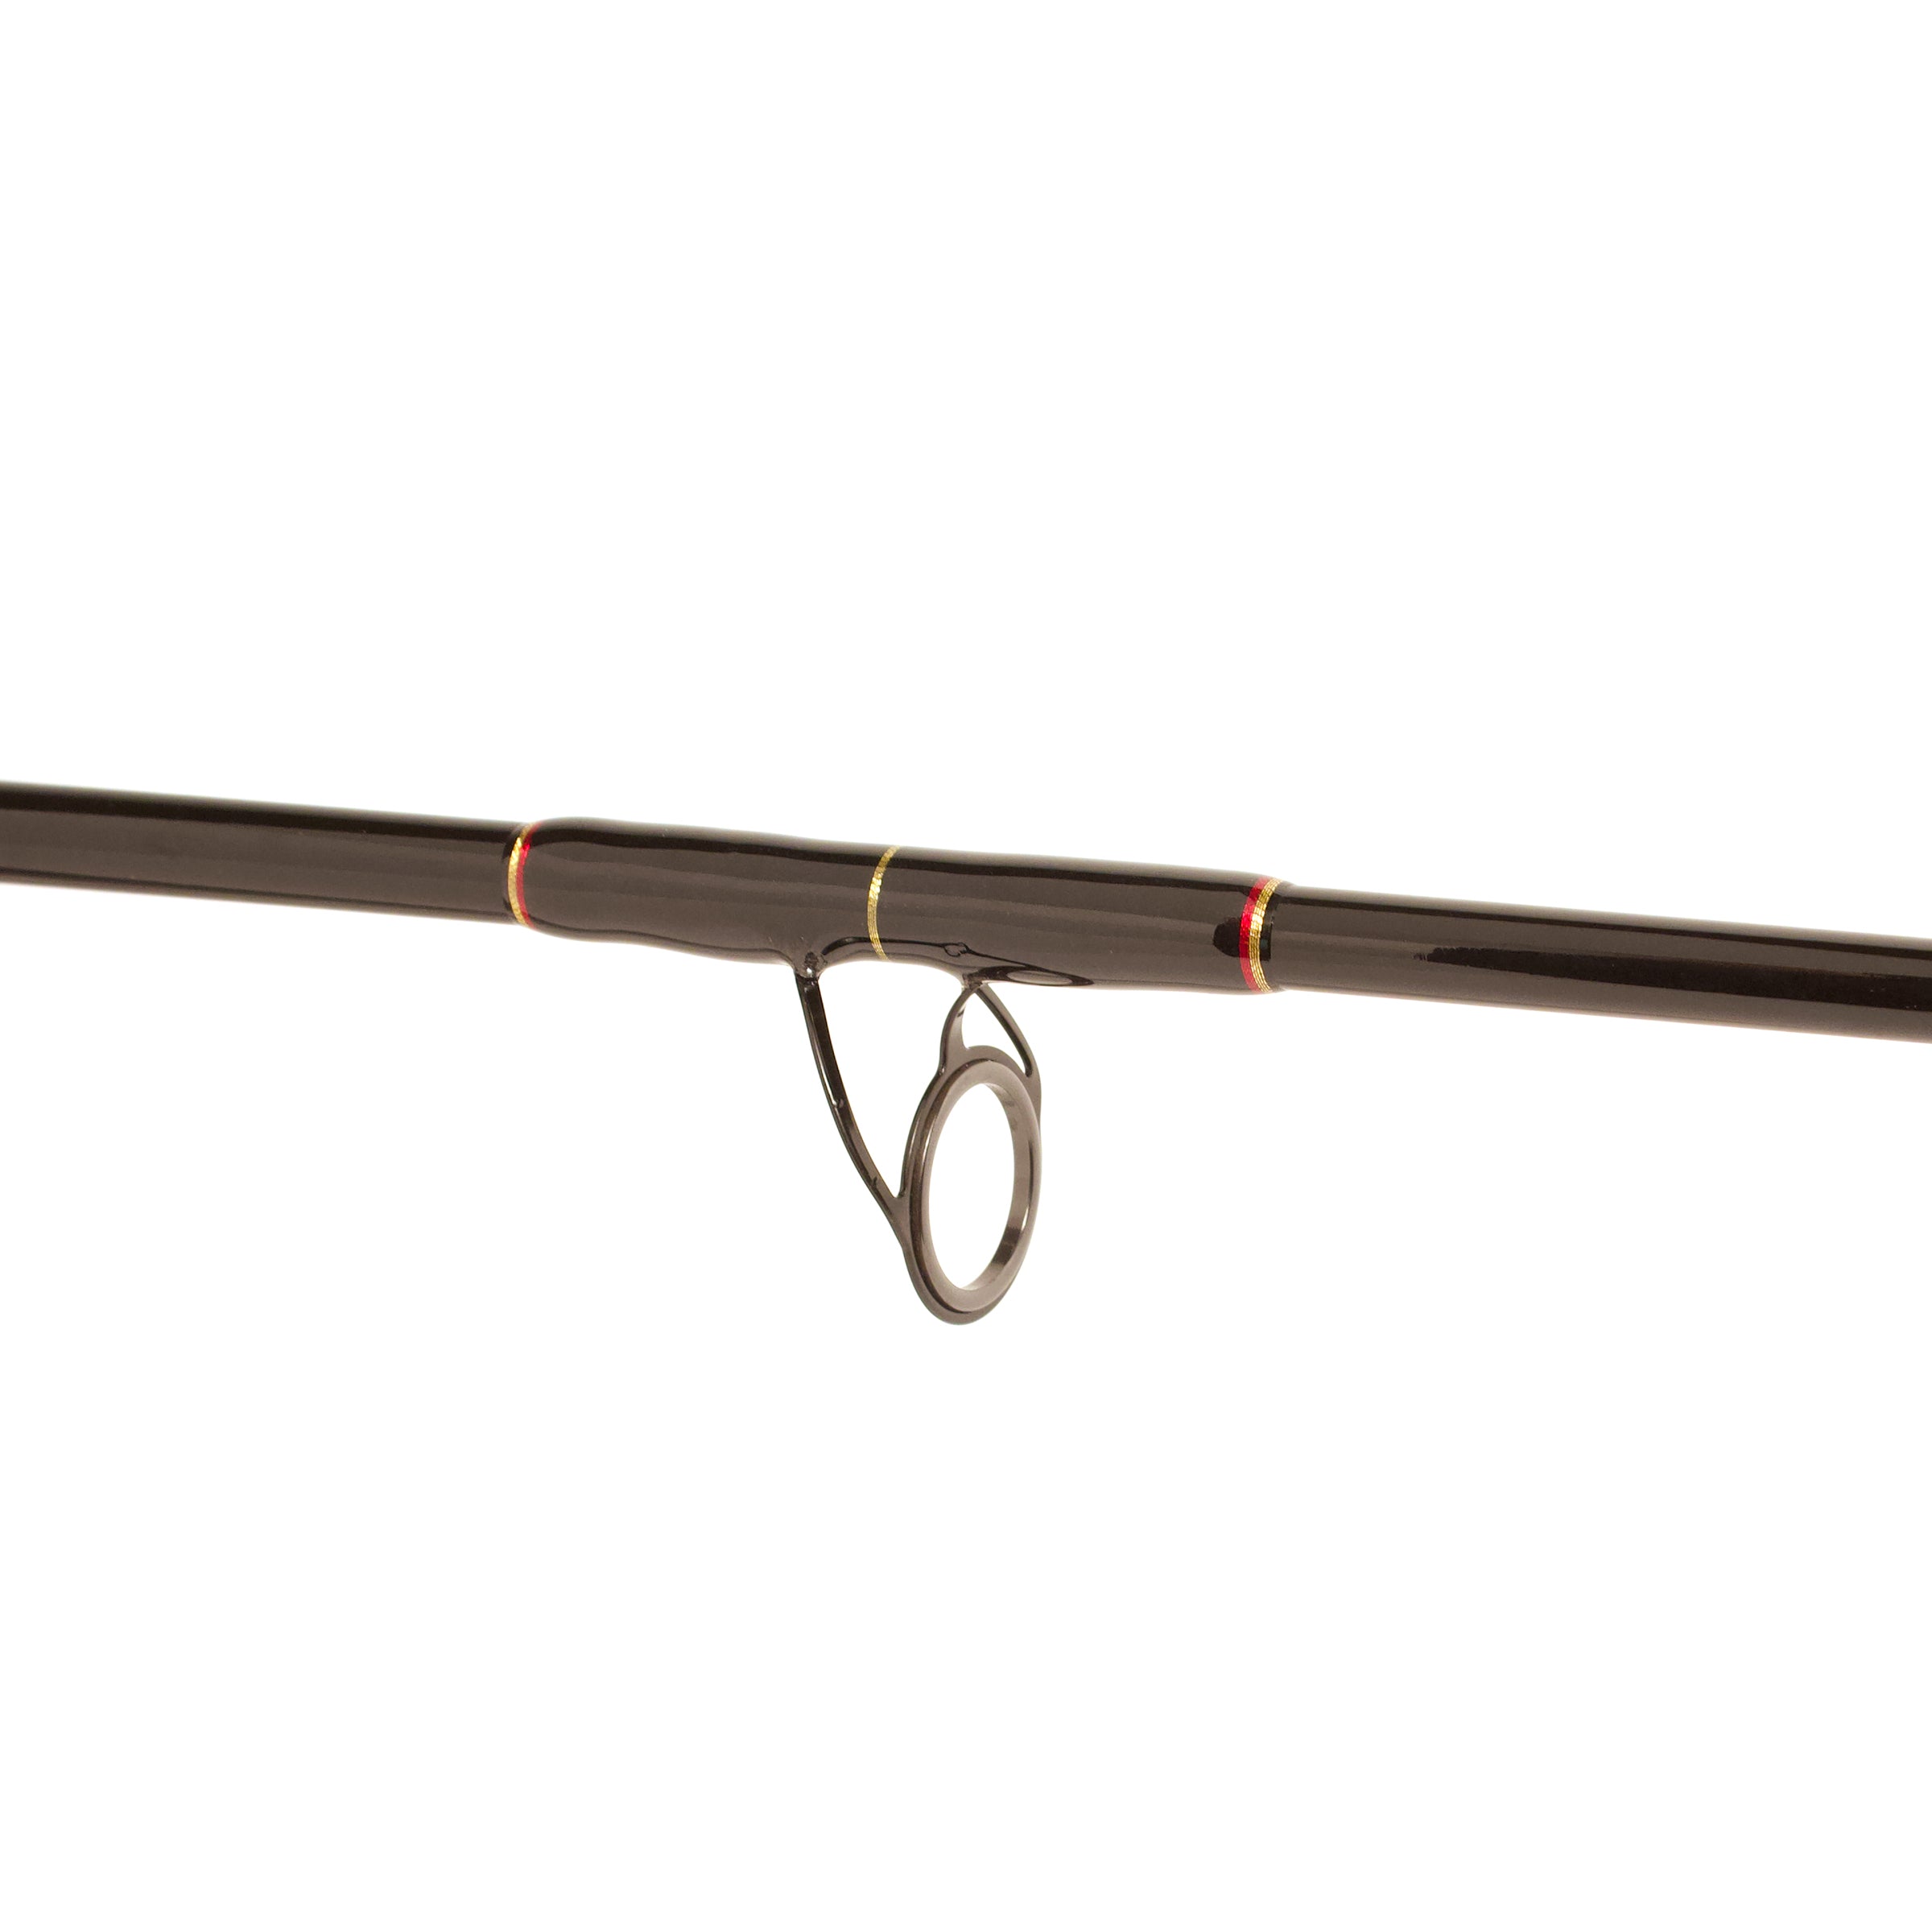 Fish Rods Plug In Designed Catfish Rods With Comfortable EVA